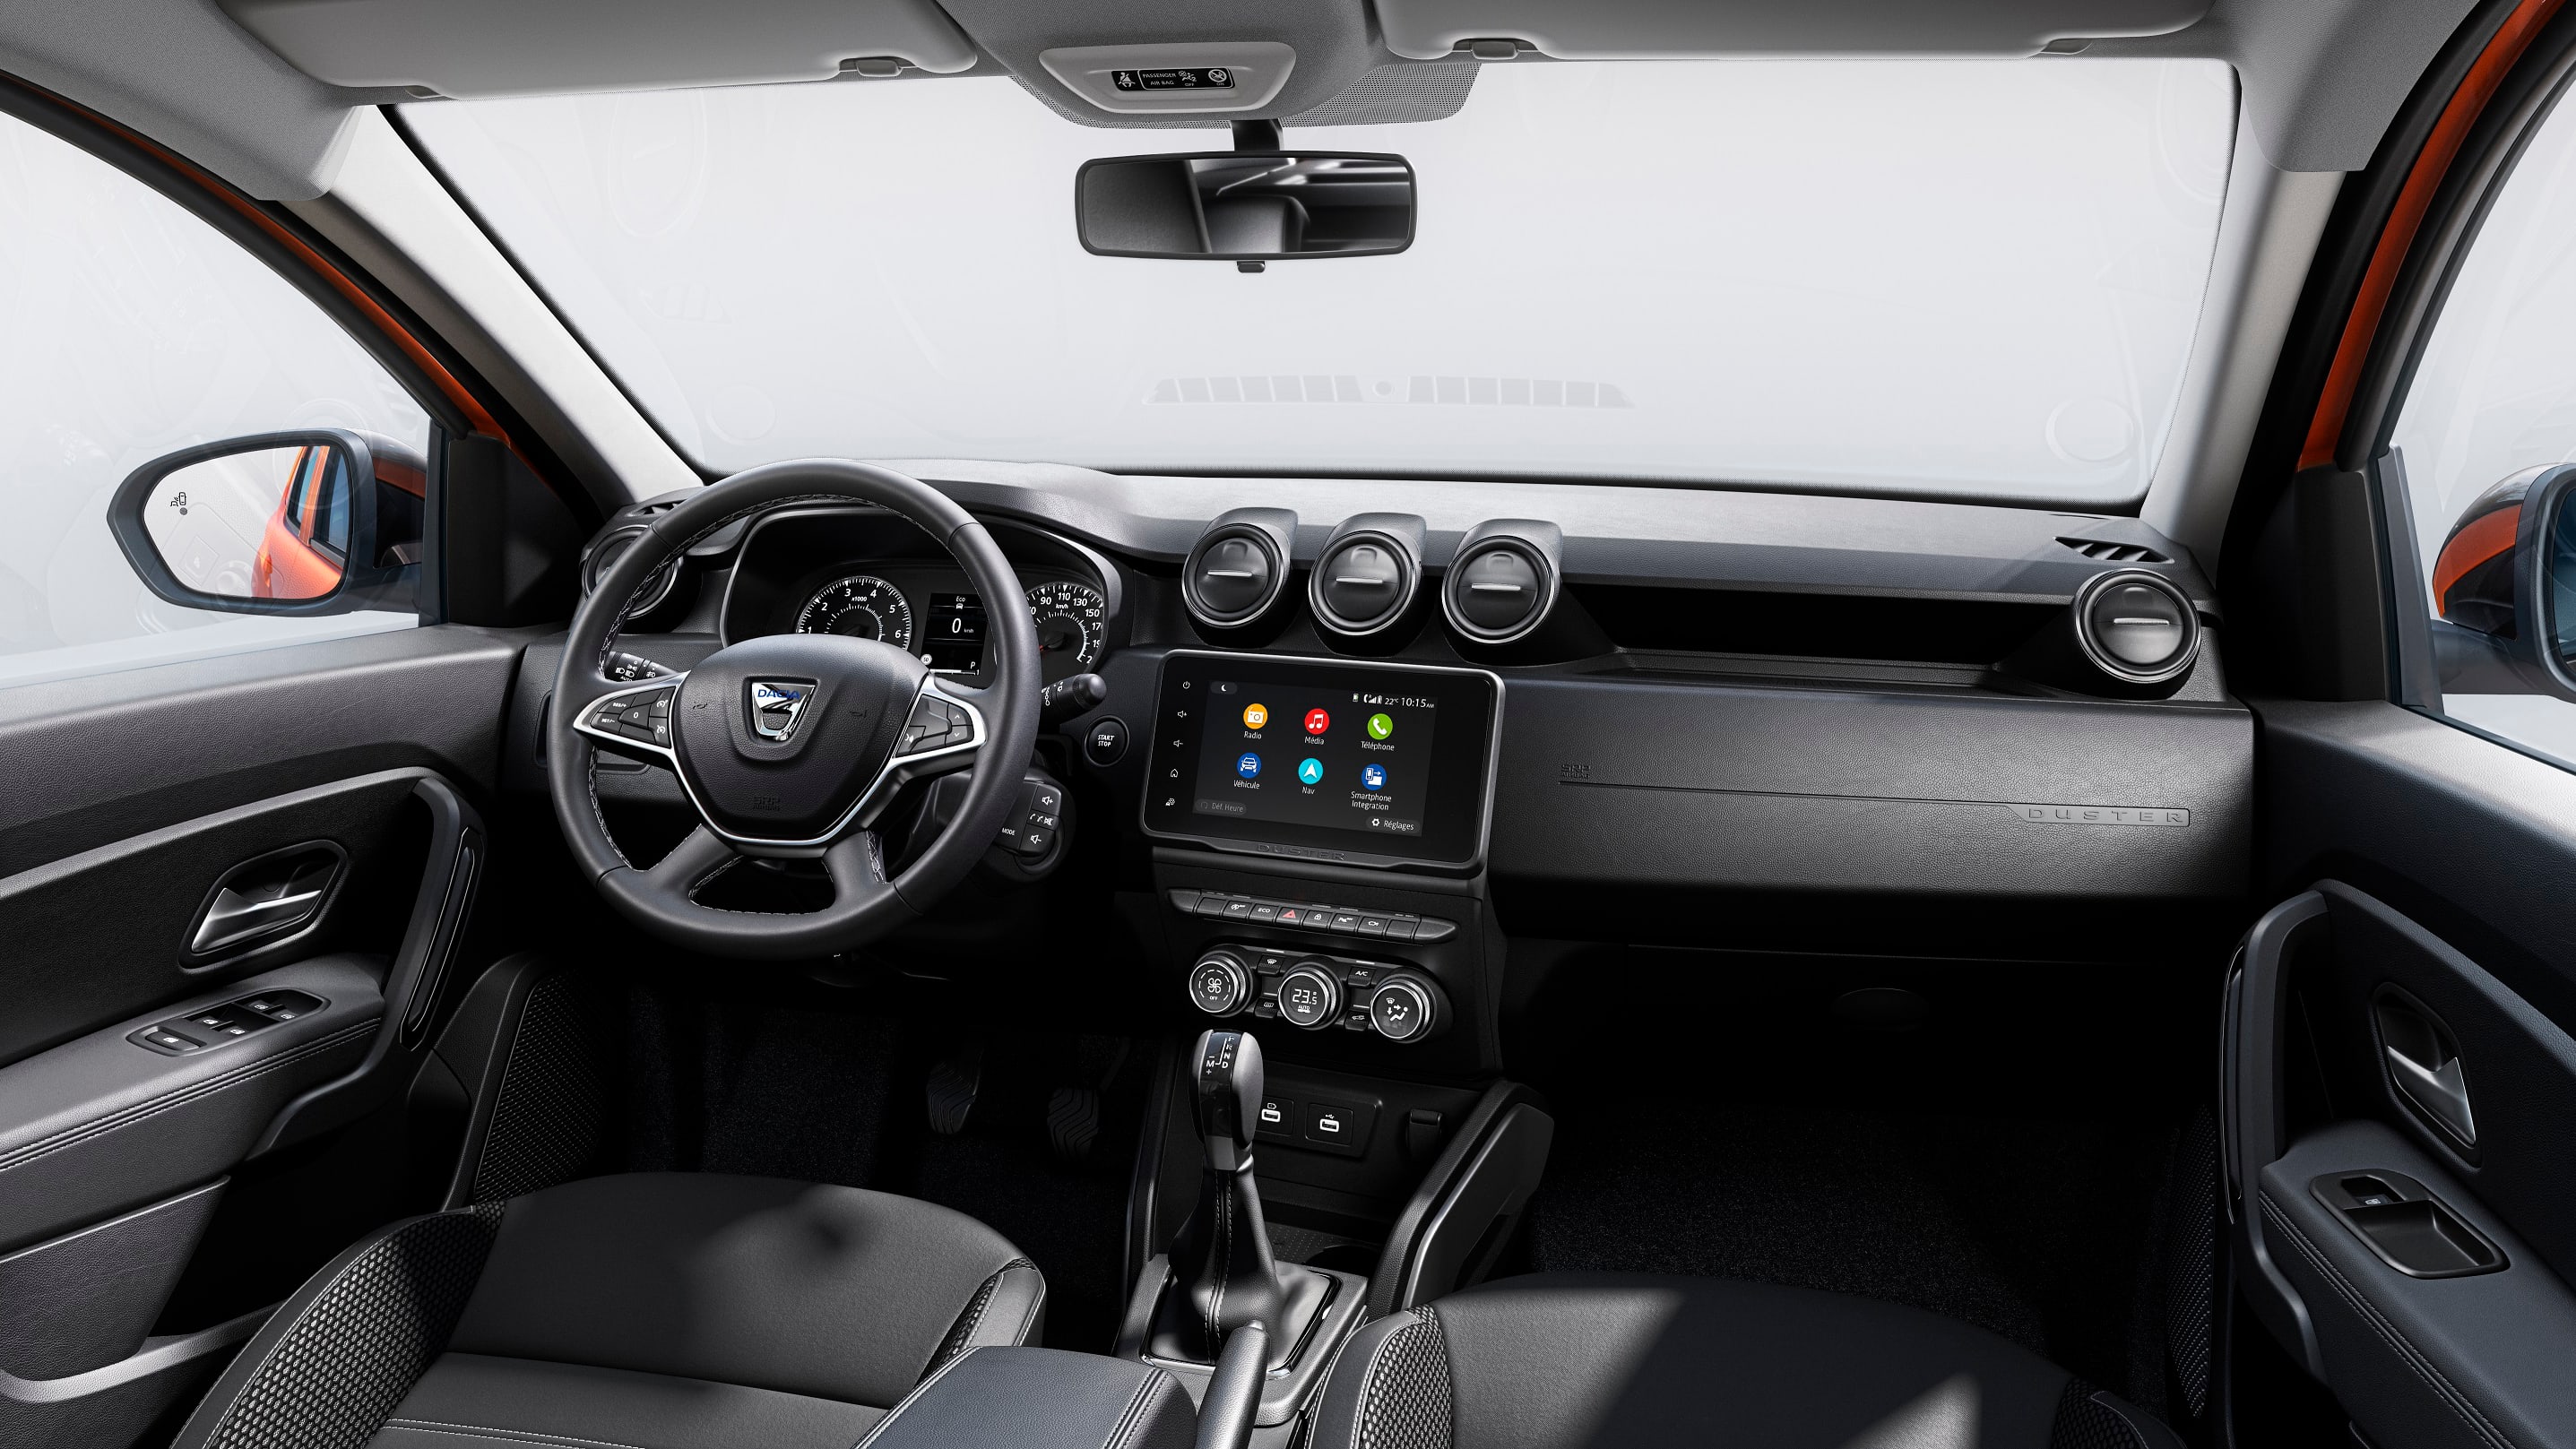 Official: Renault Duster Facelift revealed, images inside